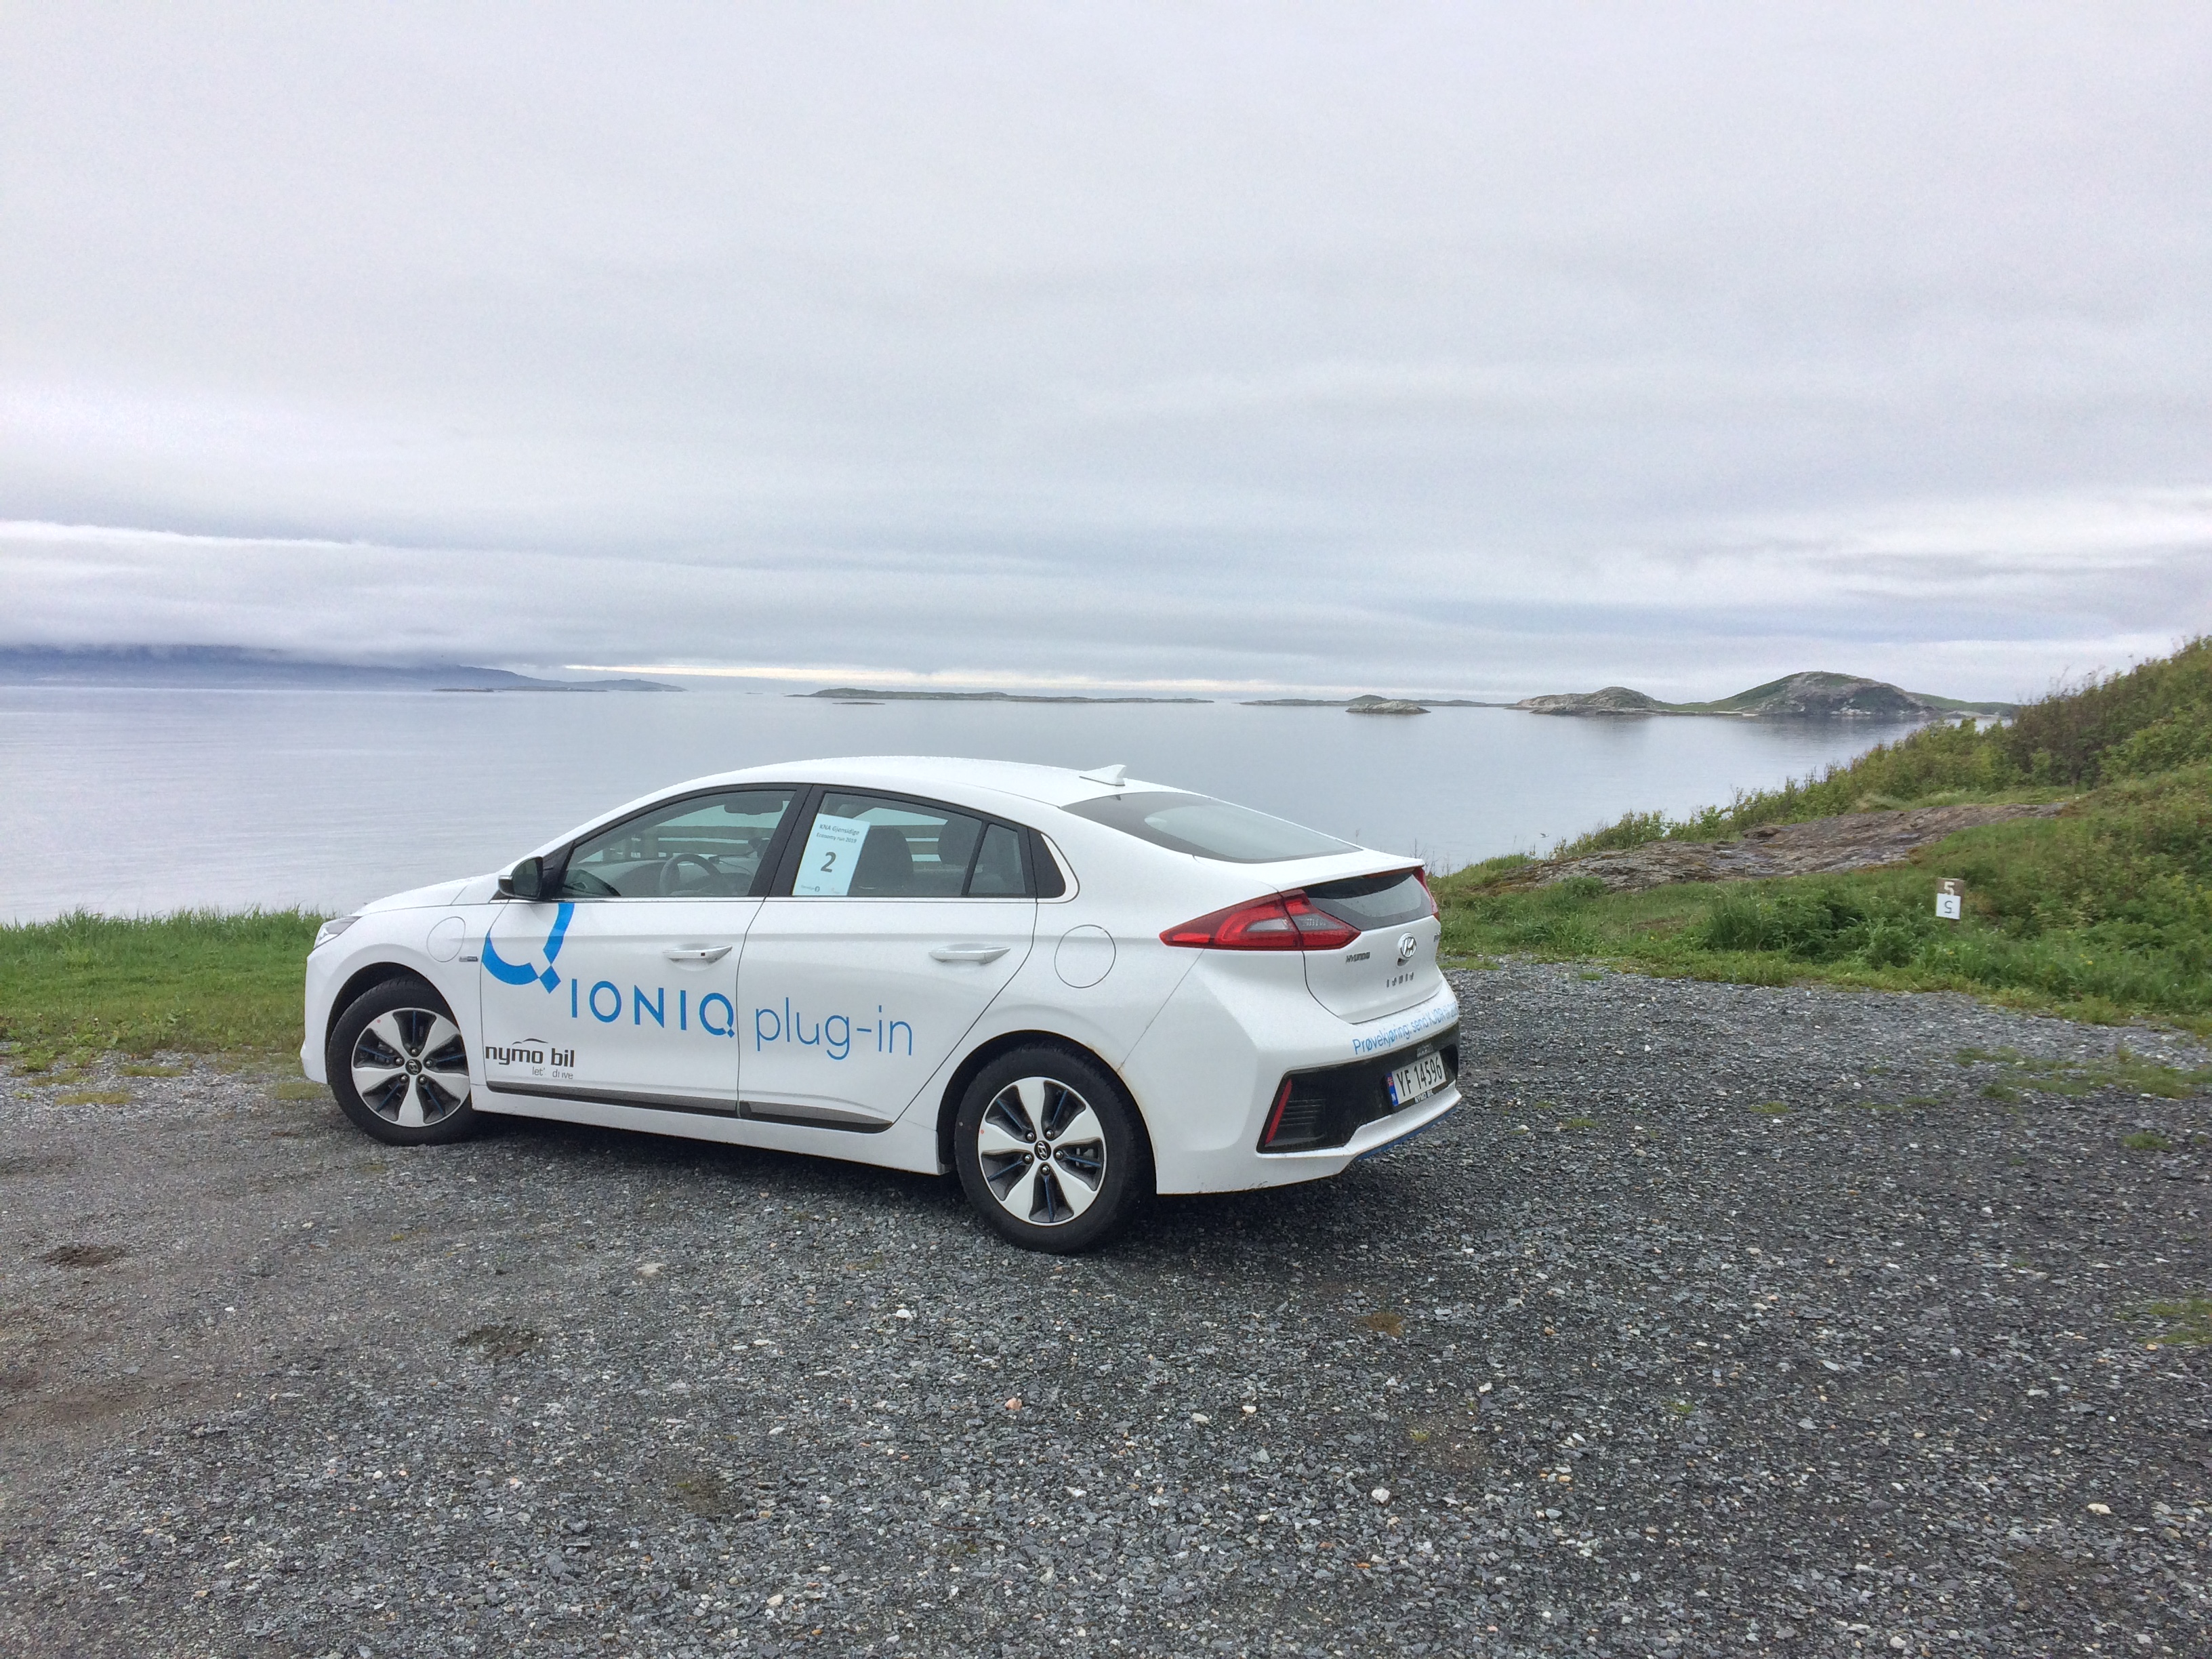 Bodø - Midnight Economy Run, Hyundai Ioniq PHEV